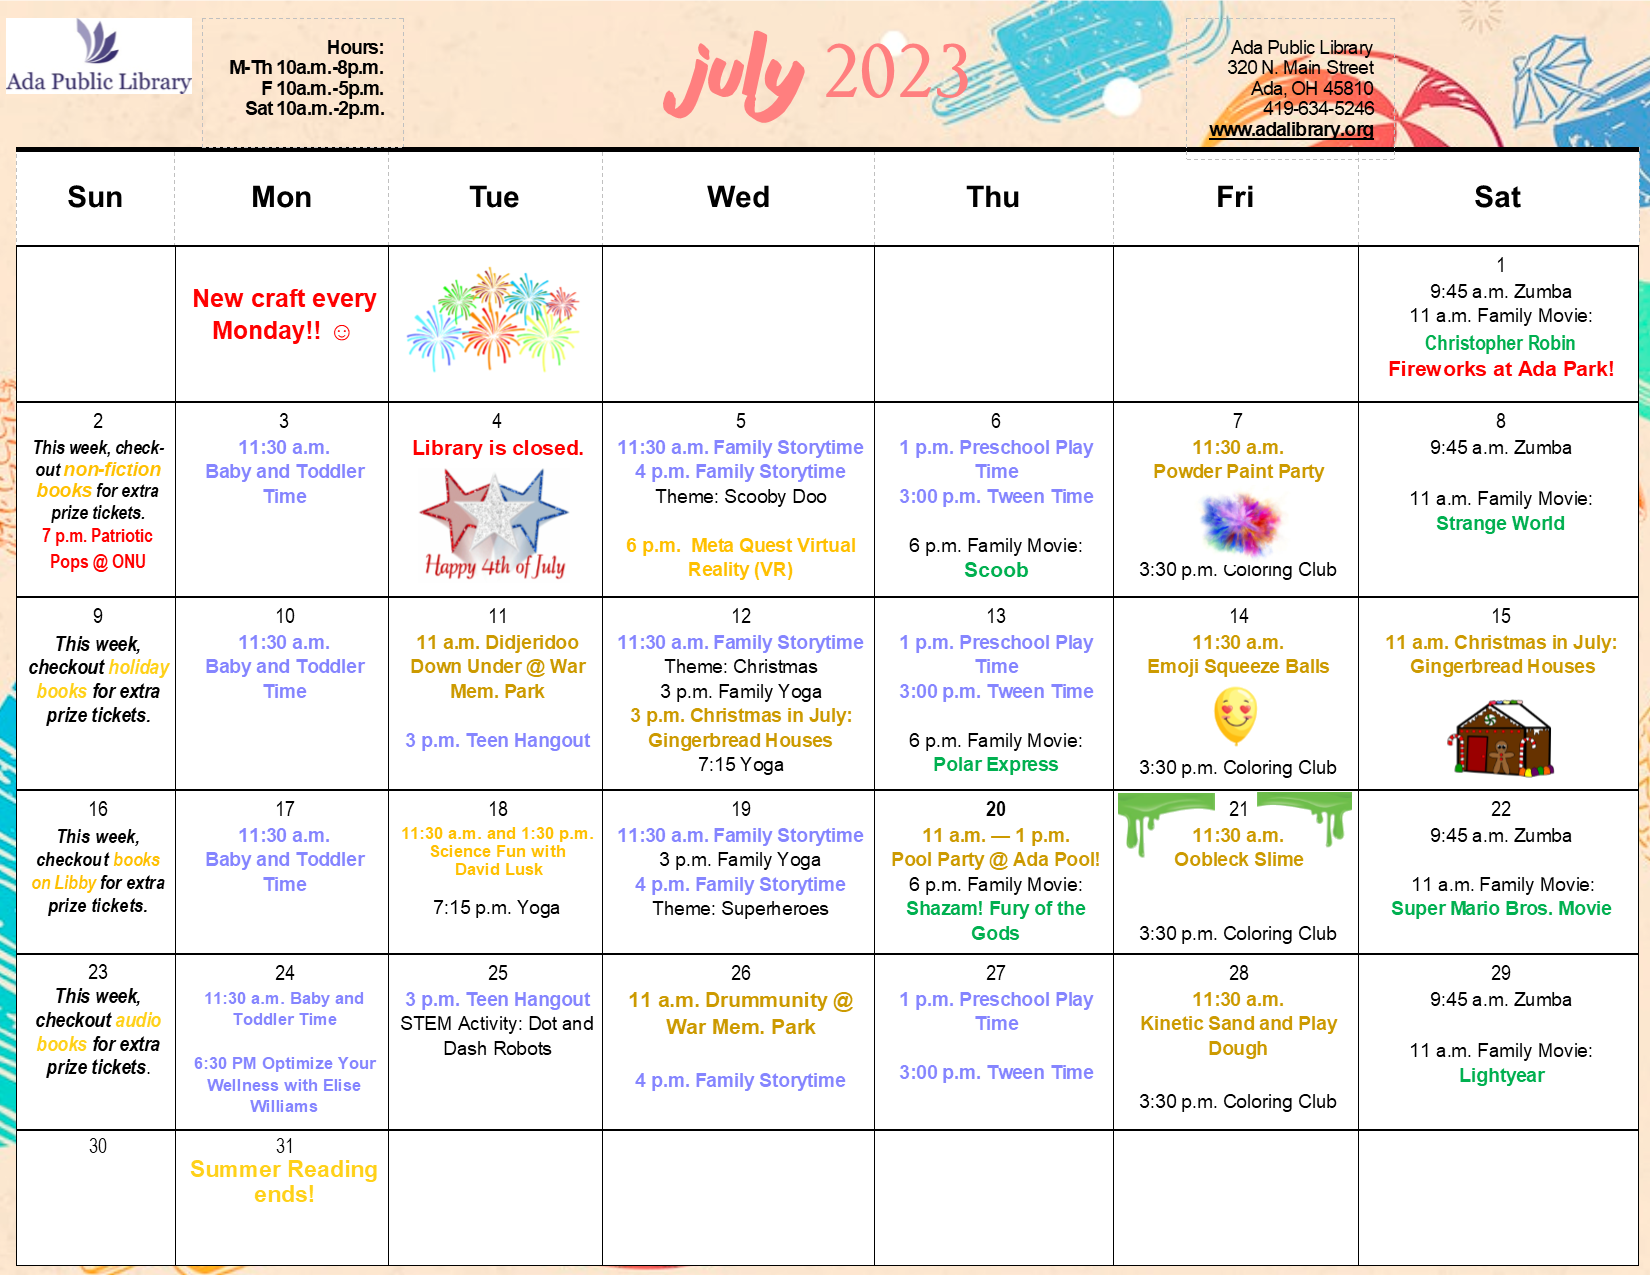 "July 2023 Activity Calendar"